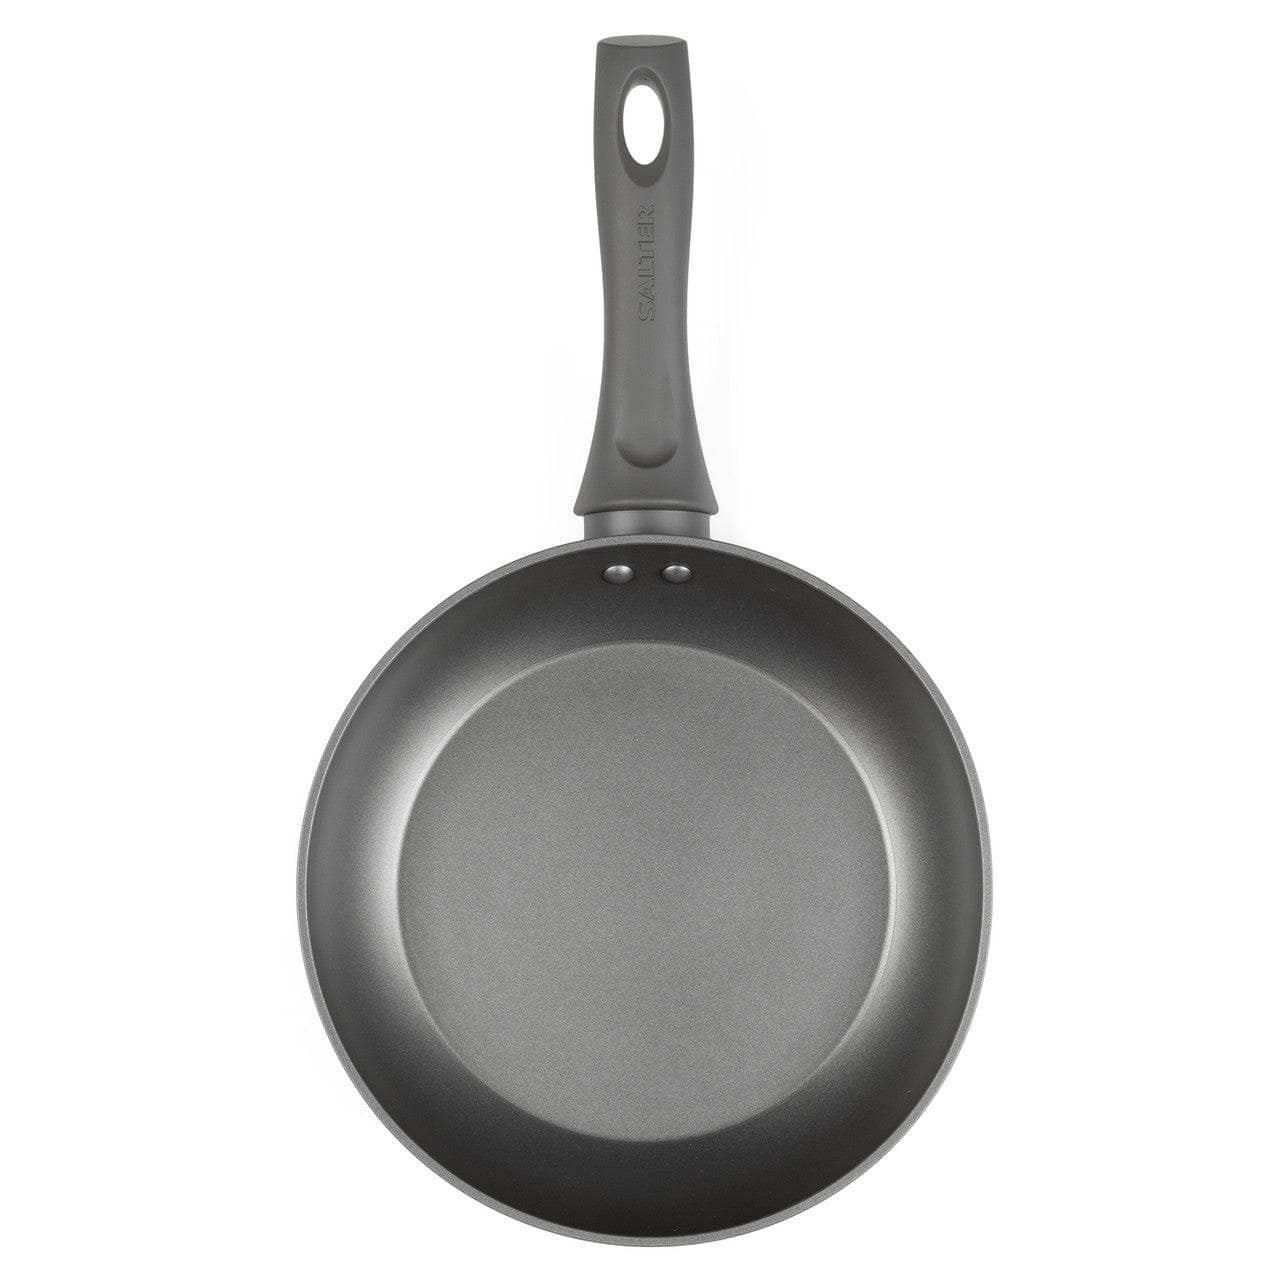 Kitchenware  -  Salter Cosmos 24cm Frypan  -  60004842